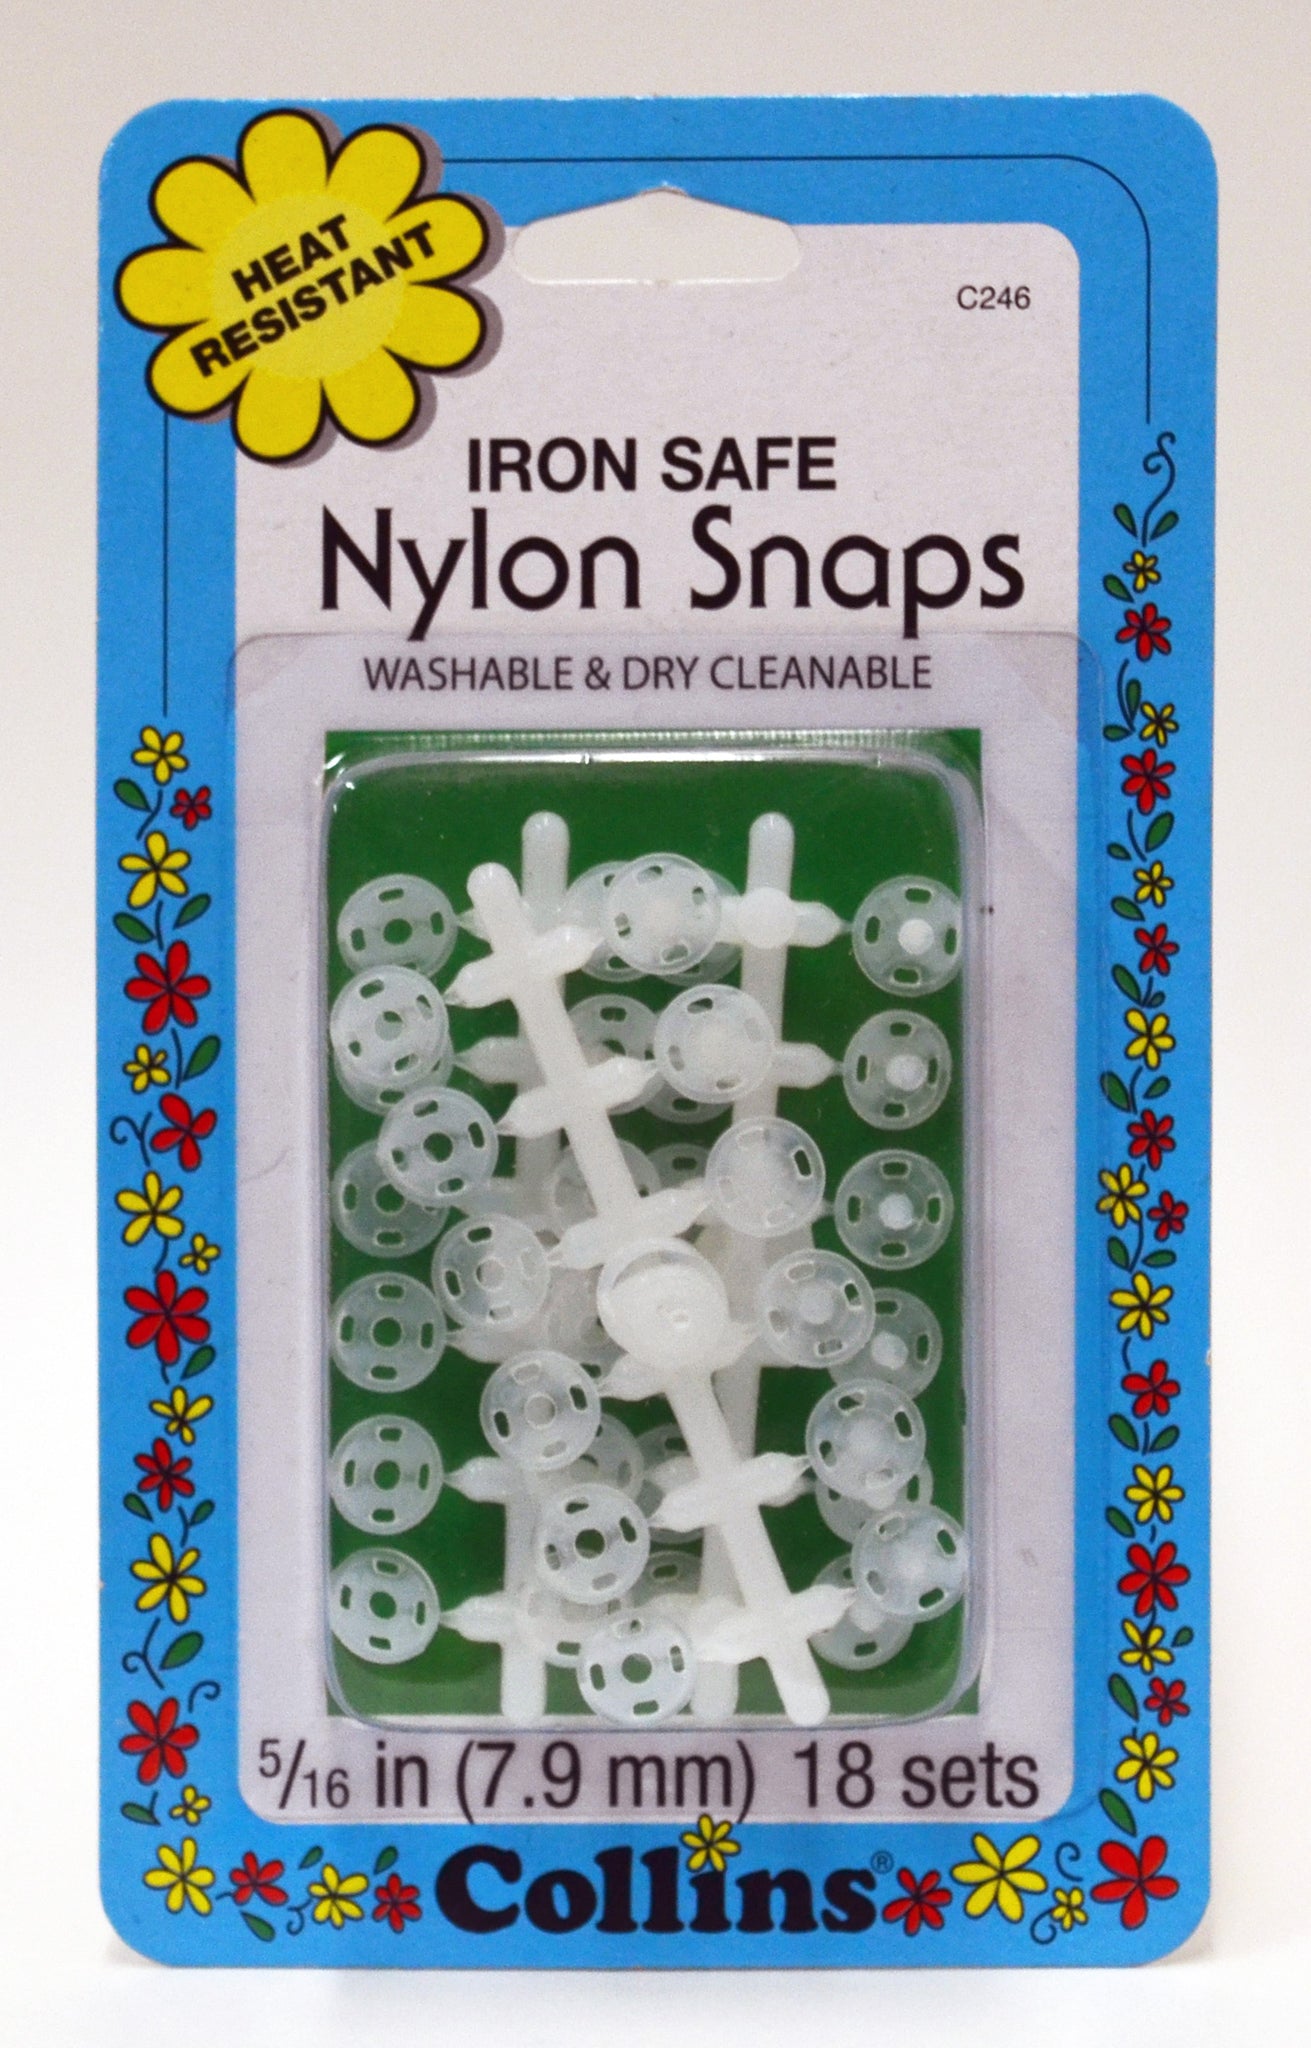 Iron Safe Nylon Snaps - 18 Sets